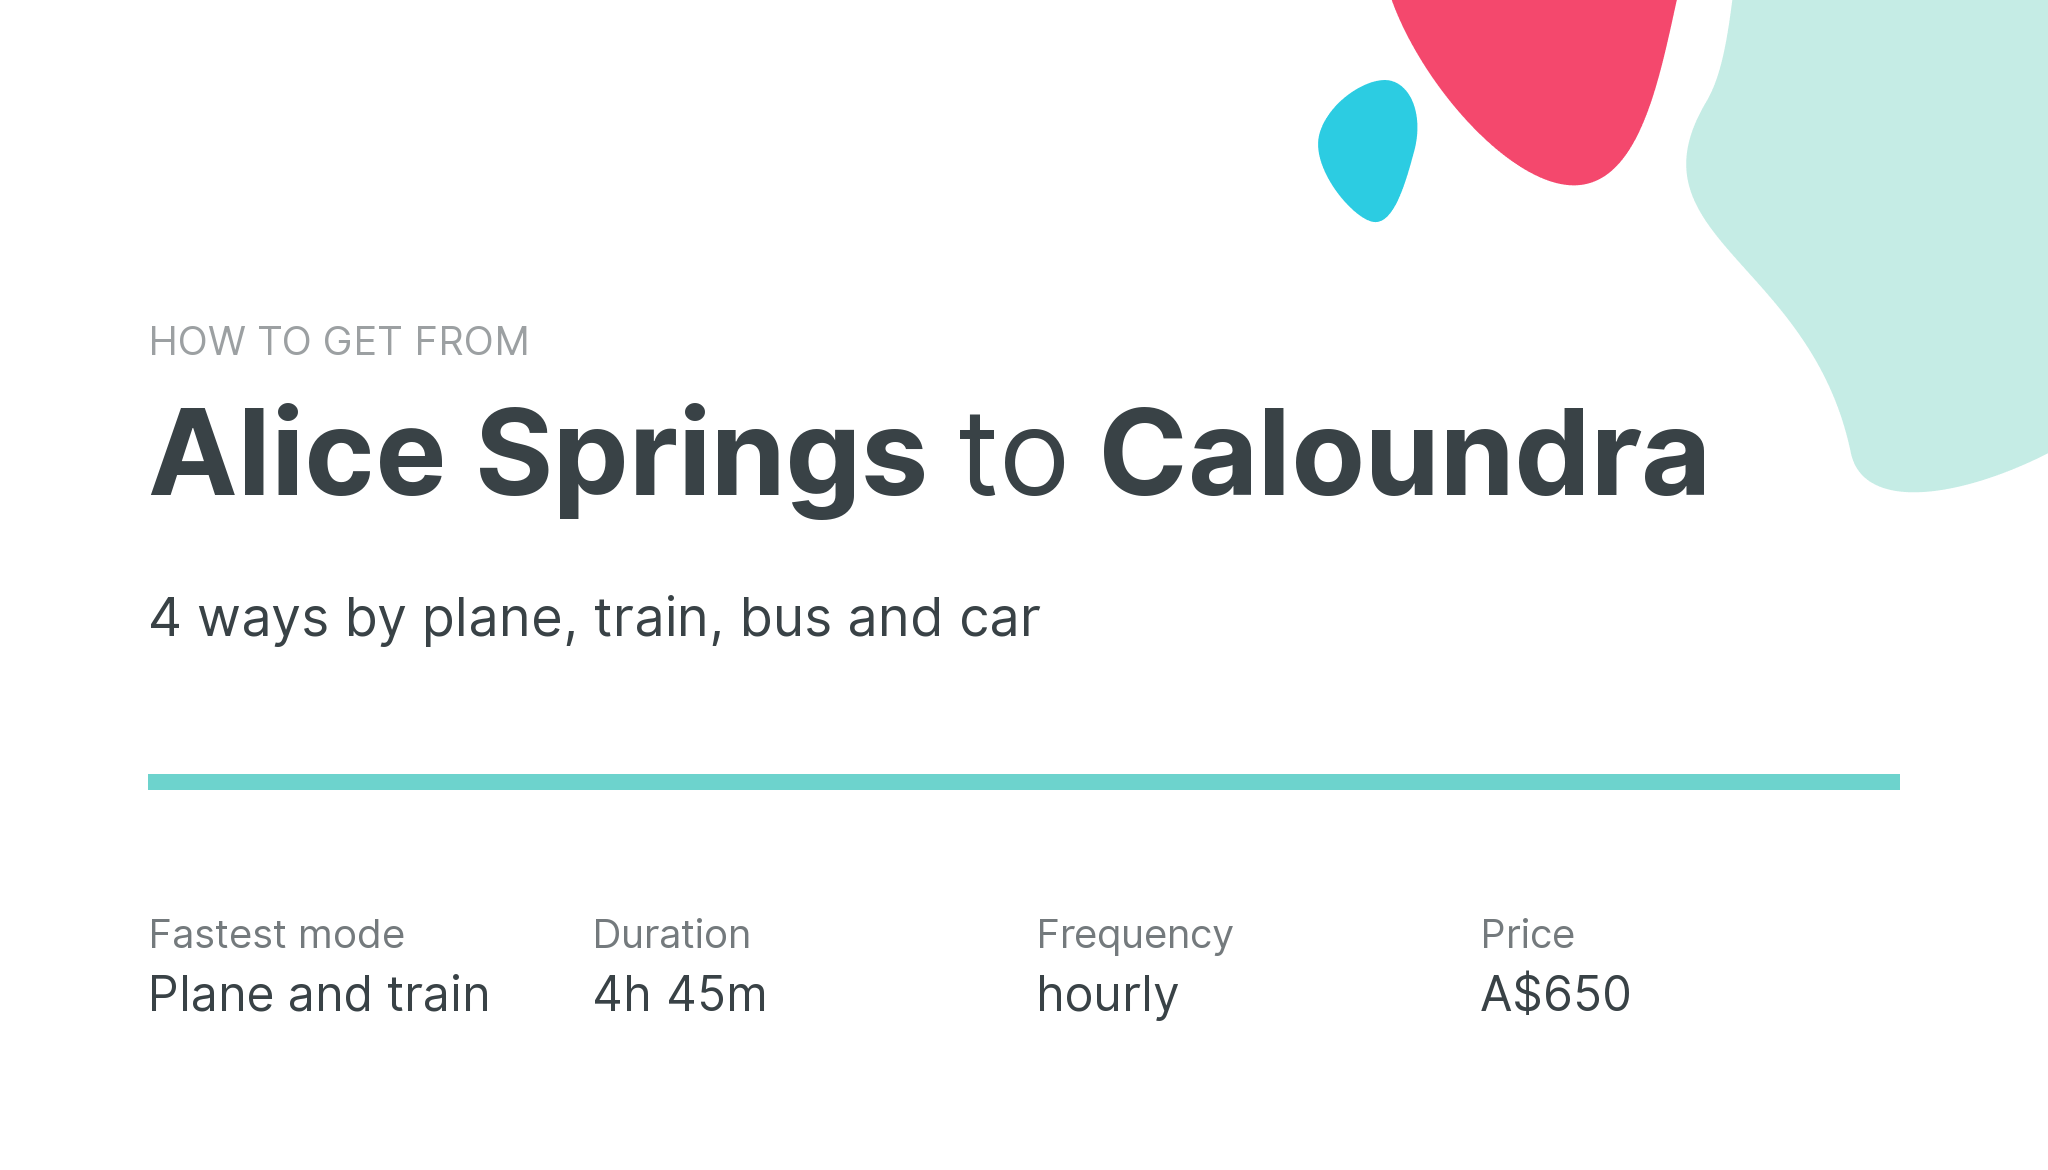 How do I get from Alice Springs to Caloundra